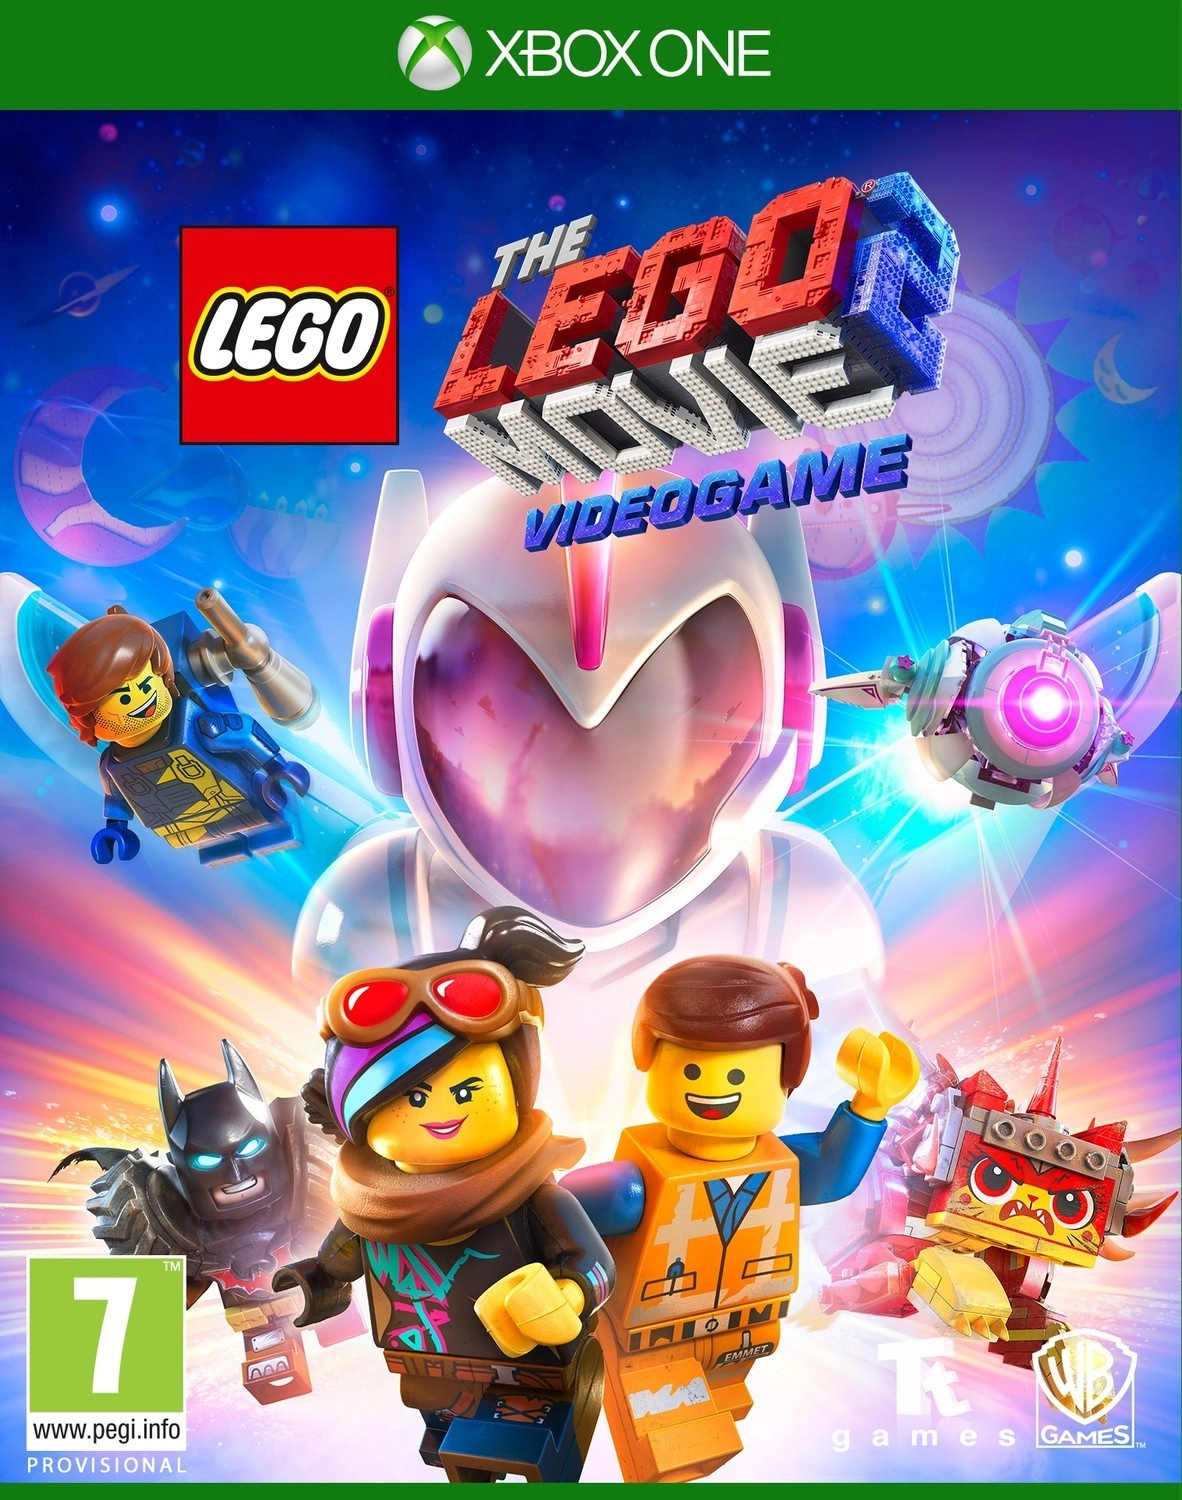 LEGO Movie 2 Videogame (Xbox One)